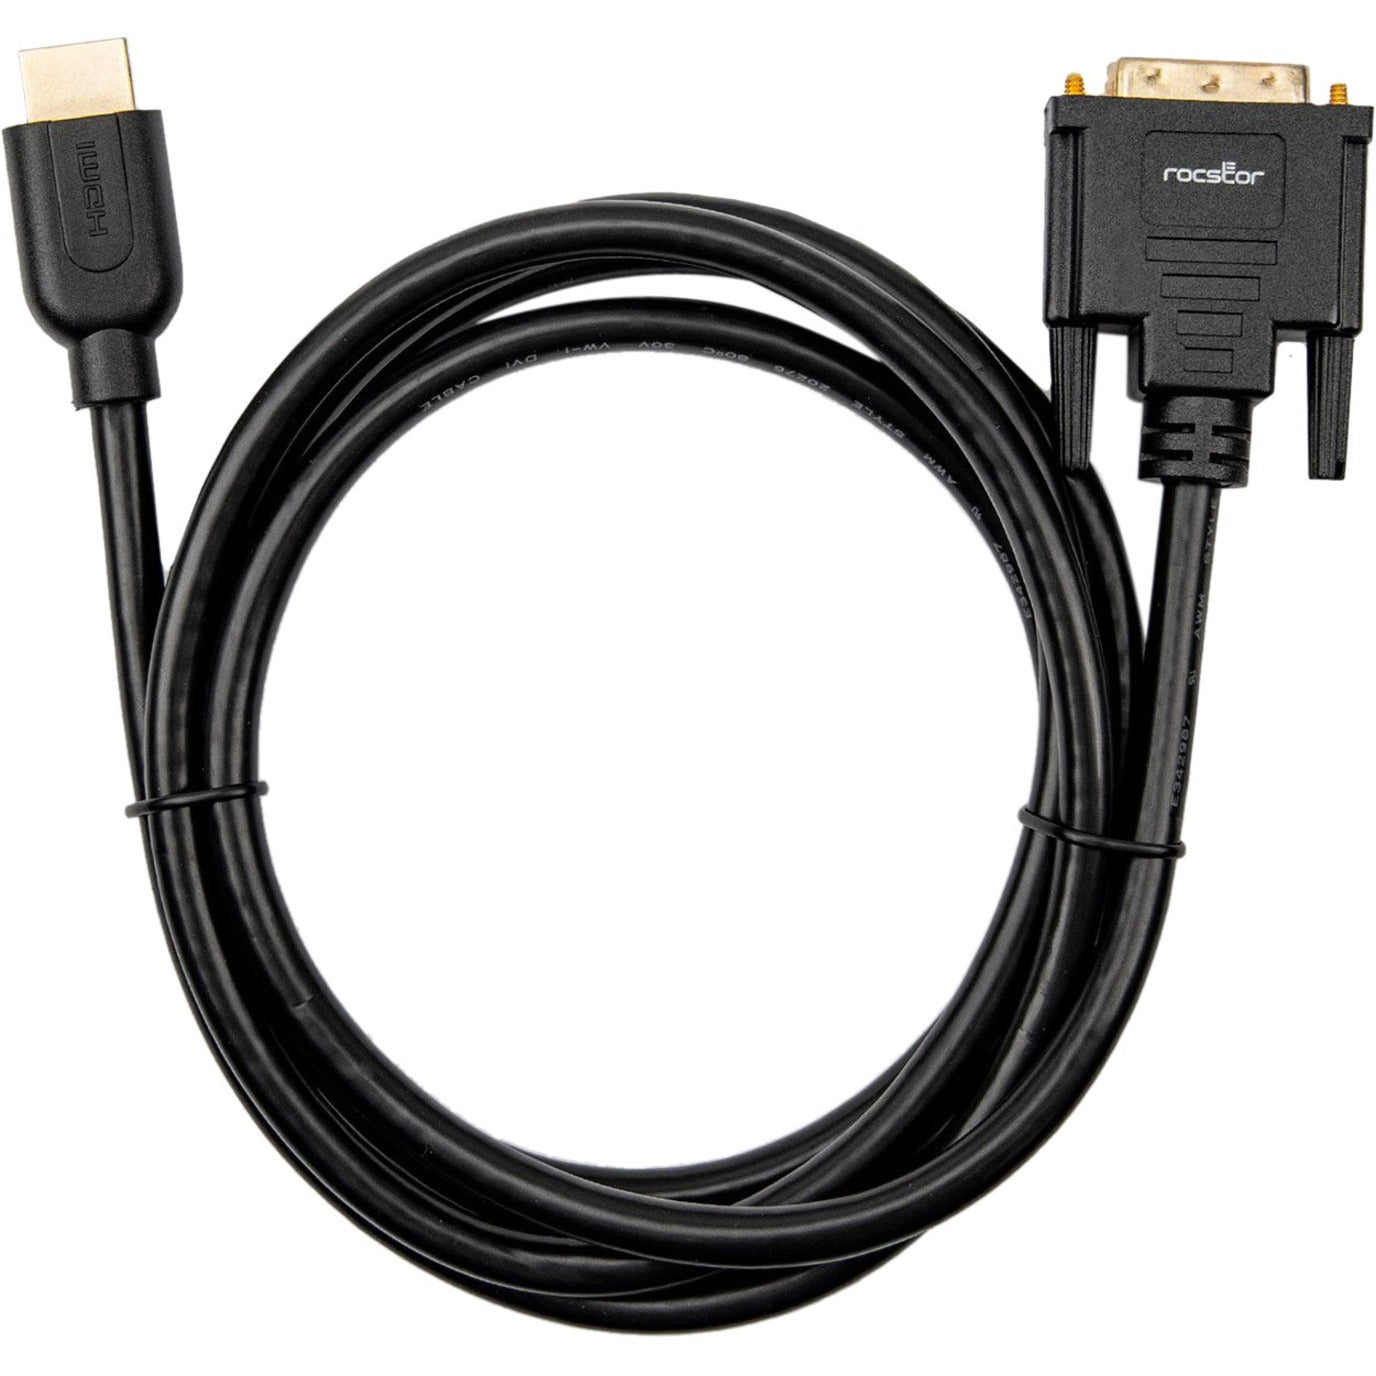 Rocstor Y10C124-B1 Premium HDMI to DVI-D Cable, 6ft - High-Quality Video Connection